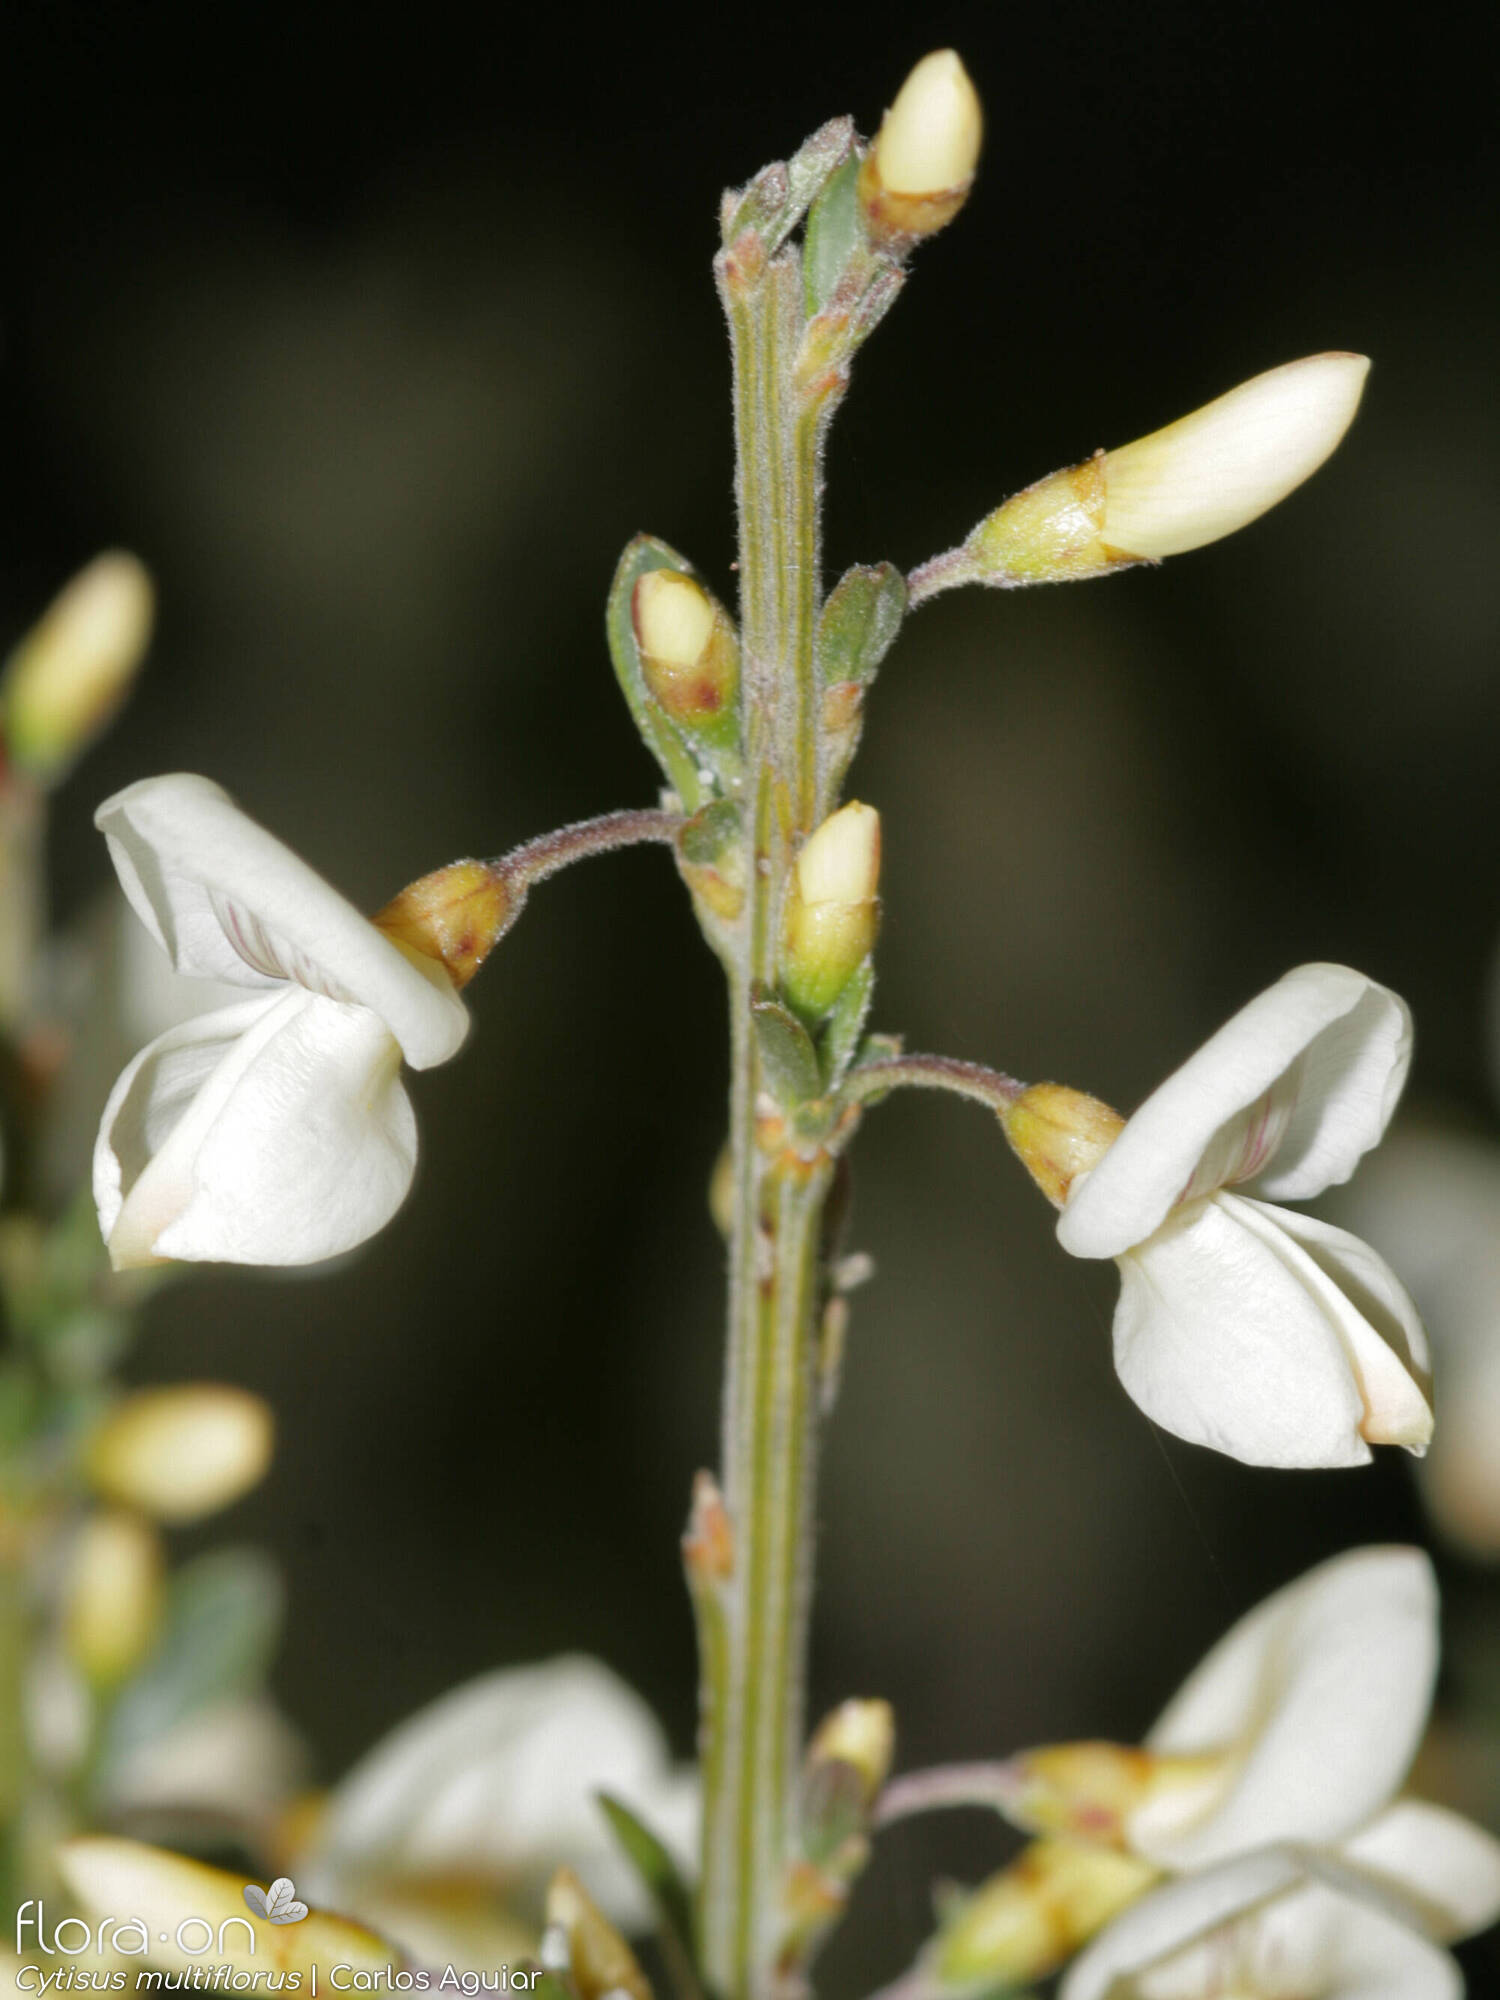 Cytisus multiflorus - Flor (geral) | Carlos Aguiar; CC BY-NC 4.0